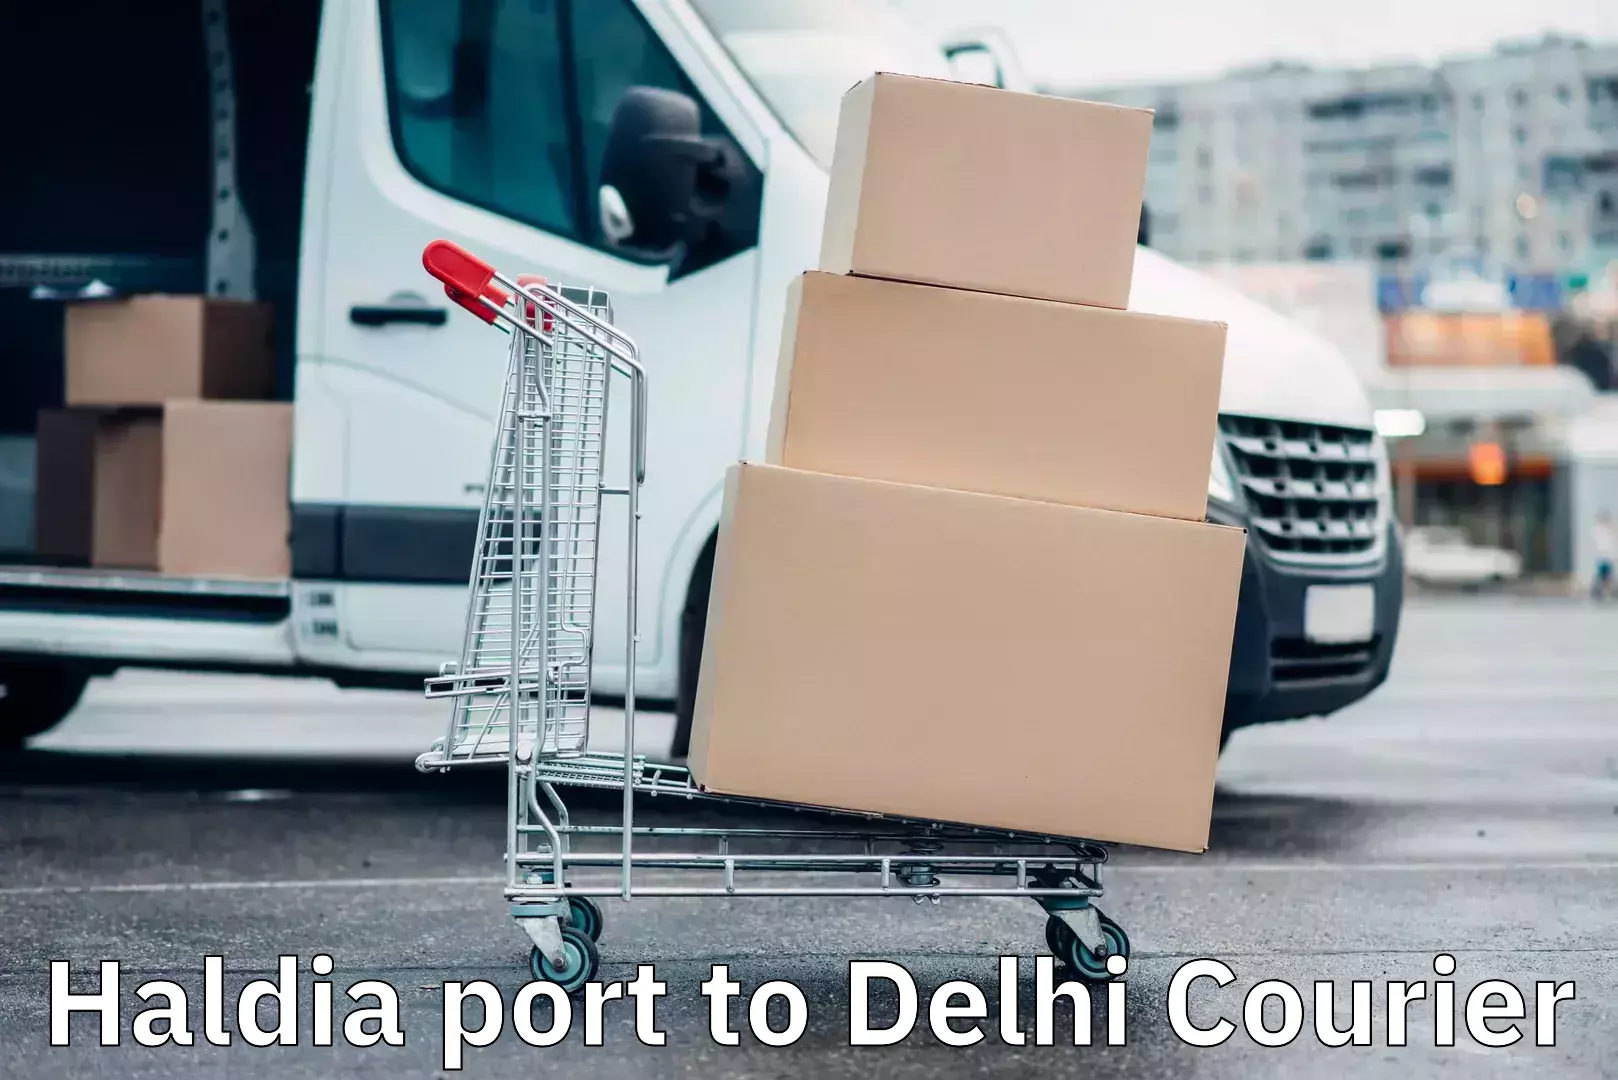 Postal and courier services Haldia port to Delhi